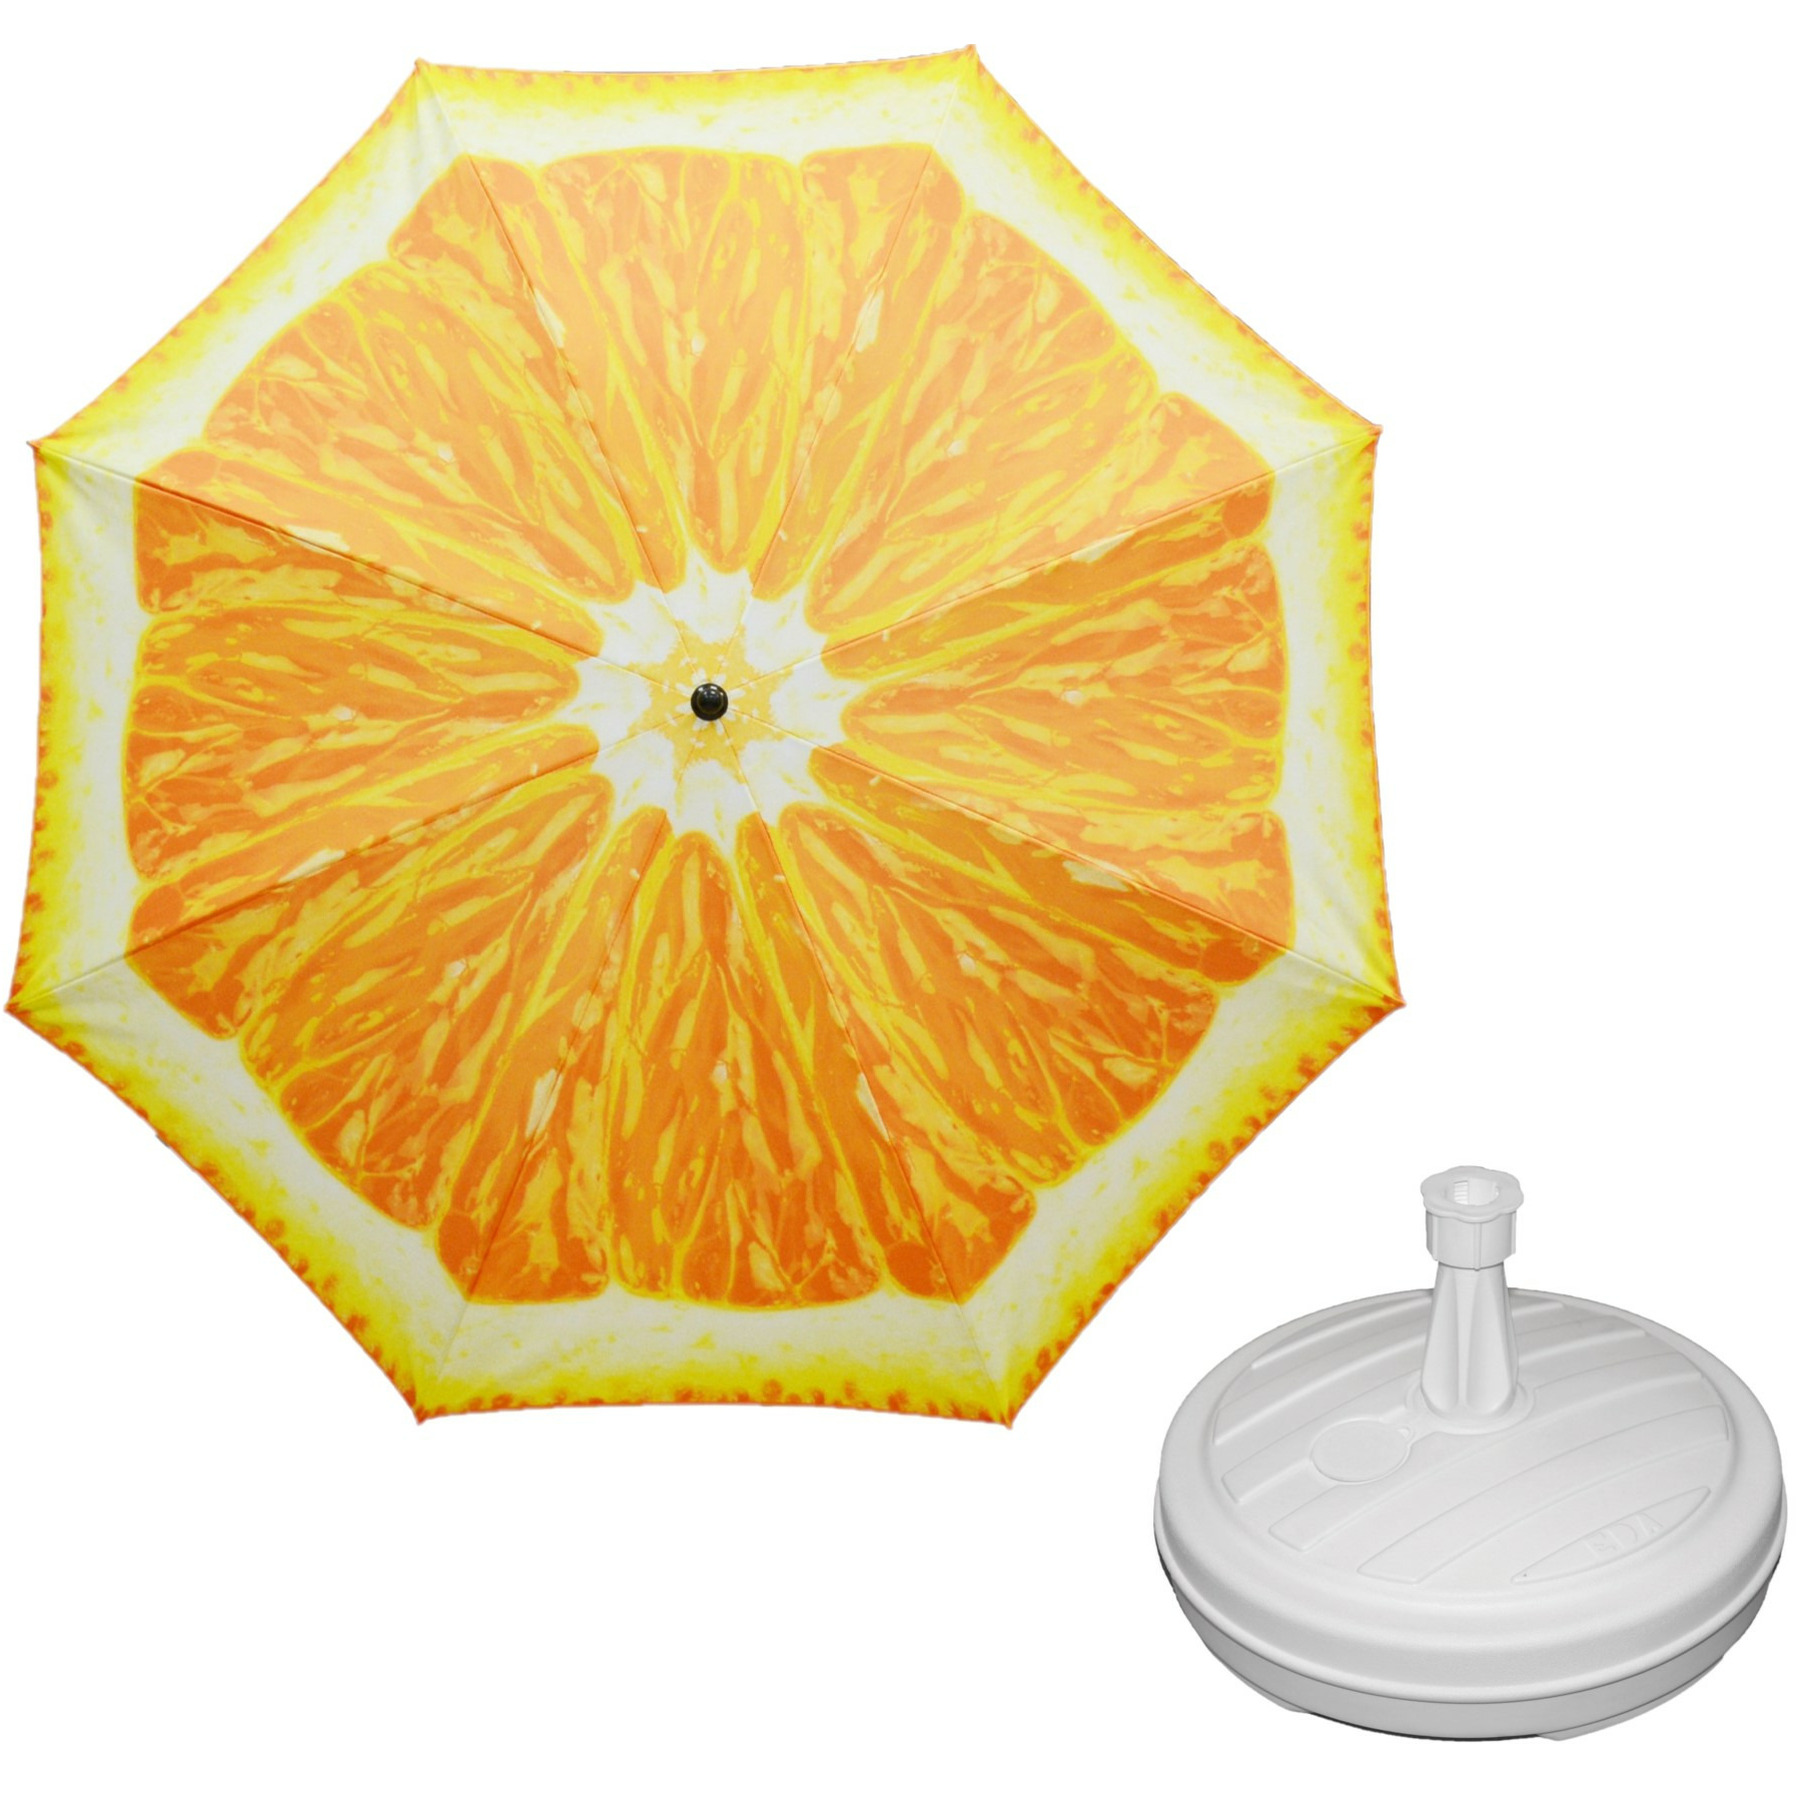 Parasol sinaasappel fruit D160 cm incl. draagtas parasolvoet 42 cm